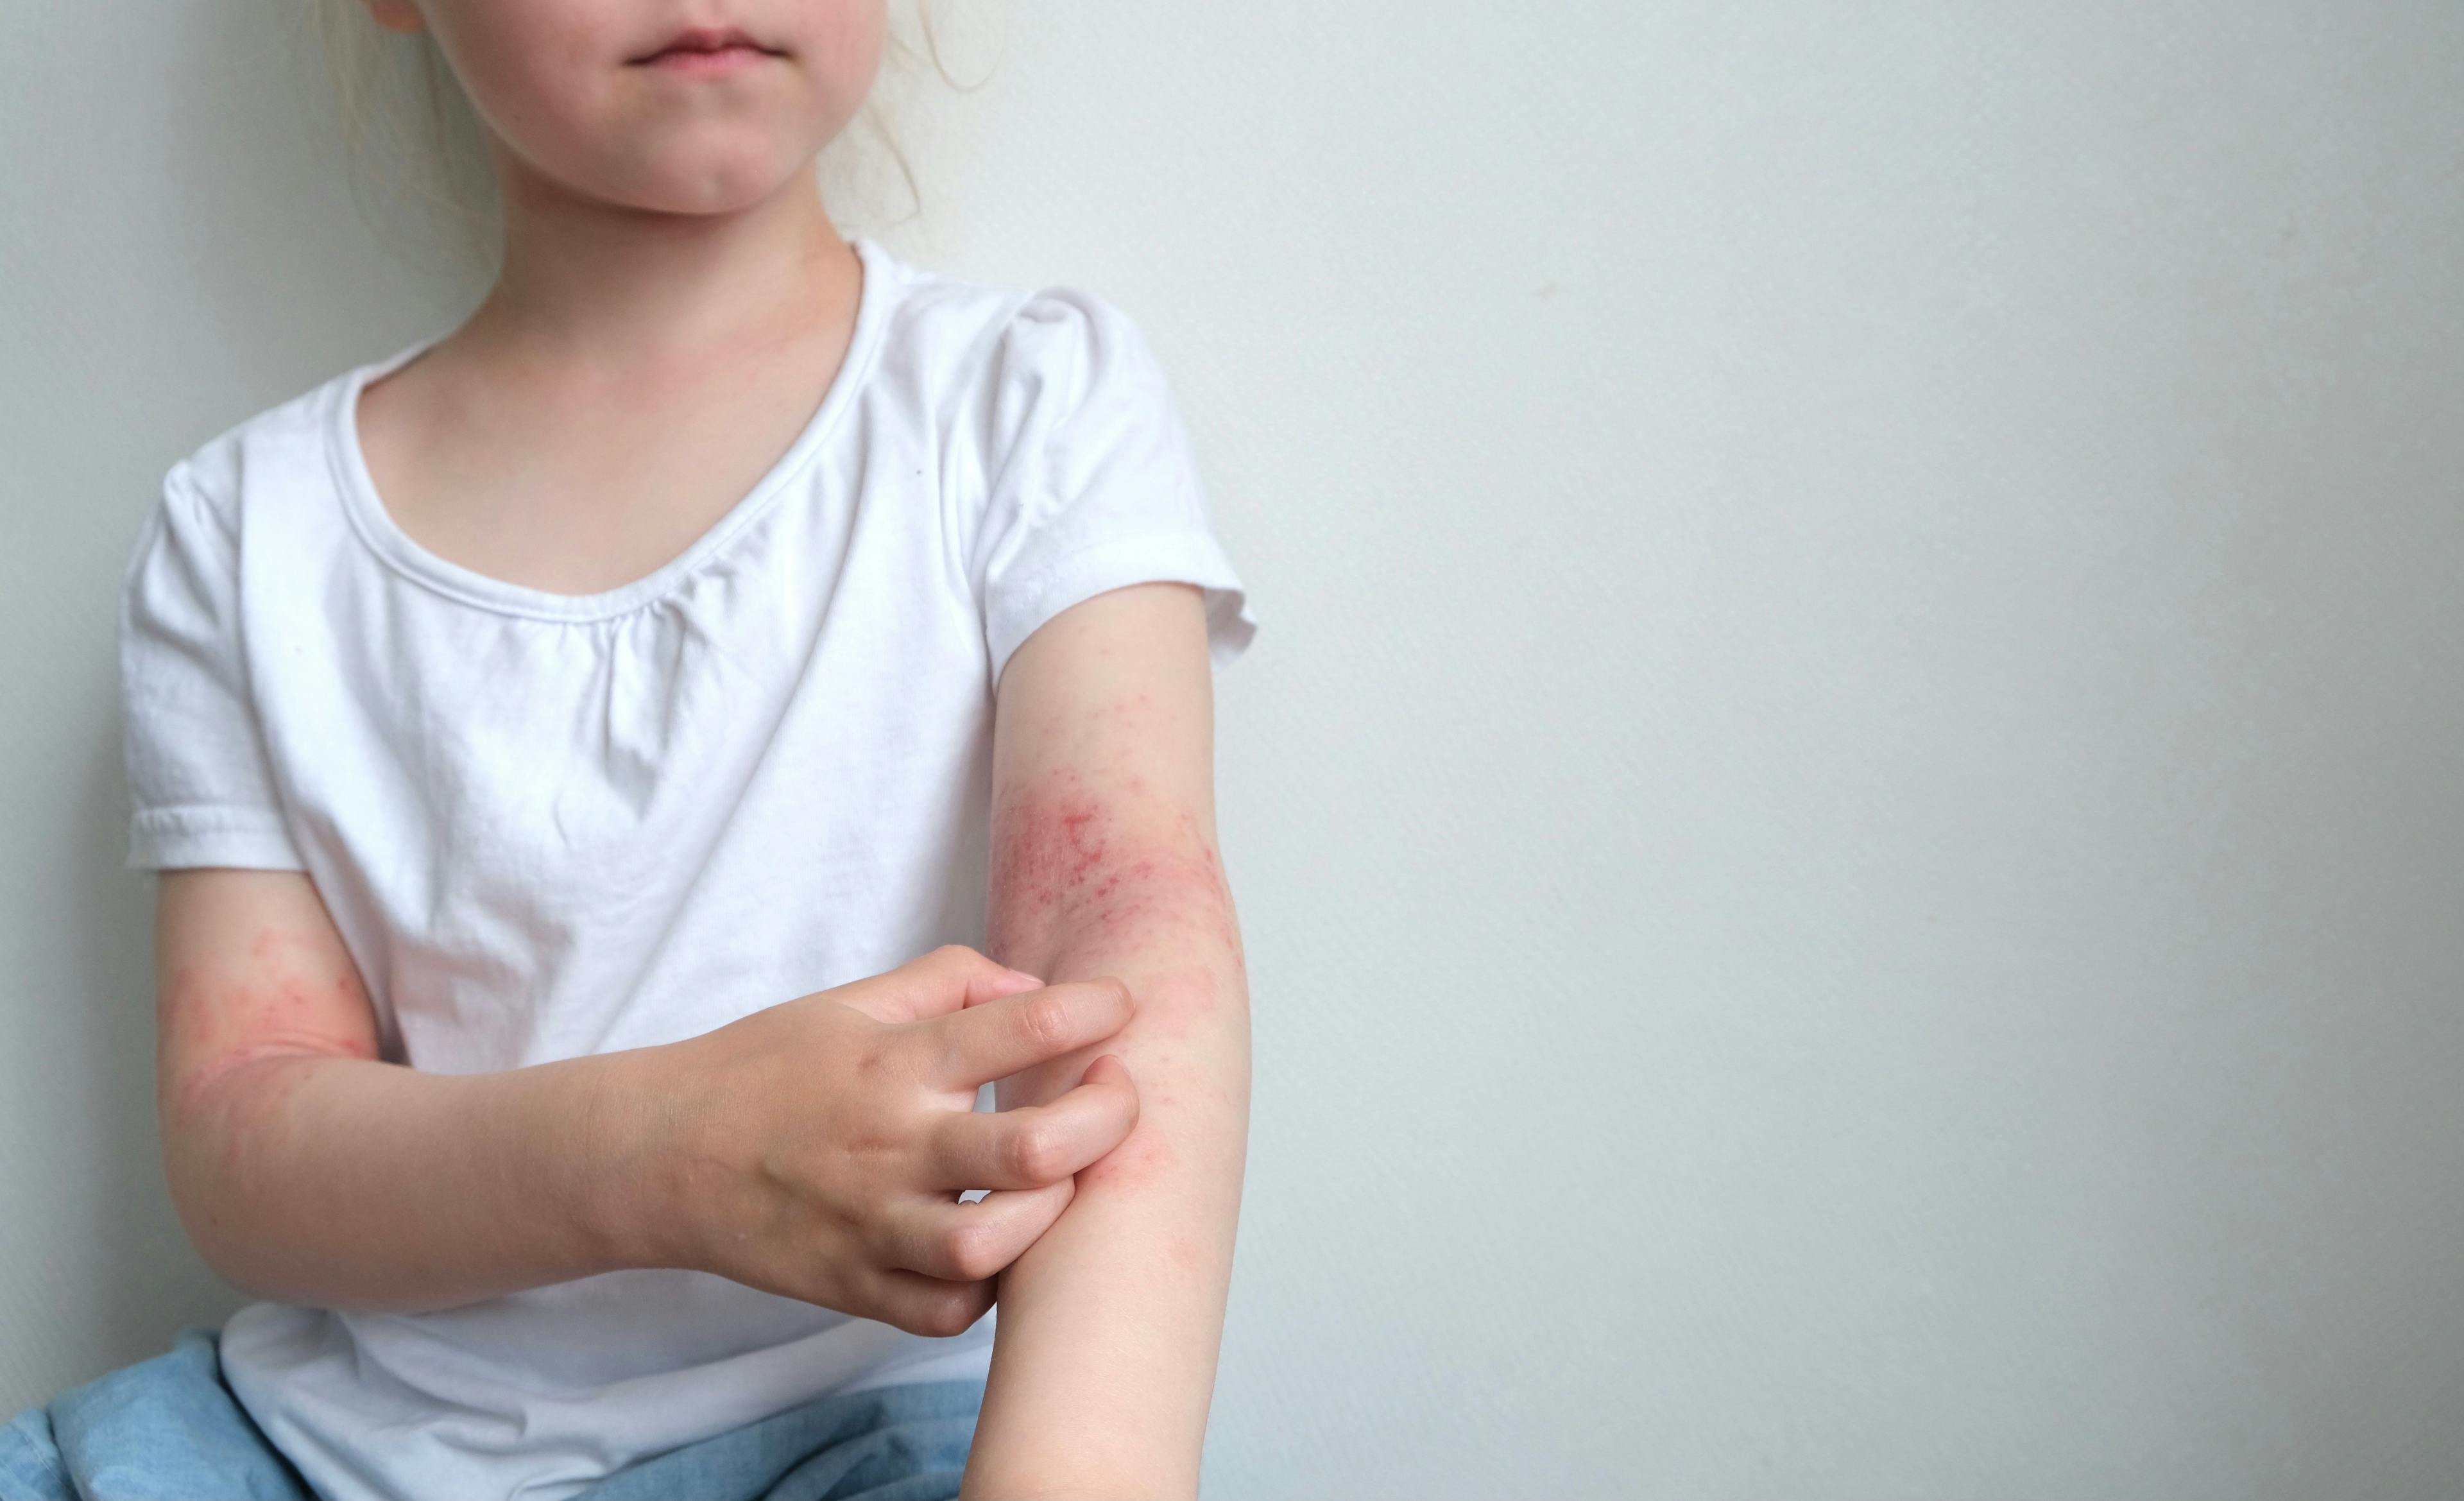 Child with atopic dermatitis (AD) | Image Credit: Марина Терехова - stock.adobe.com